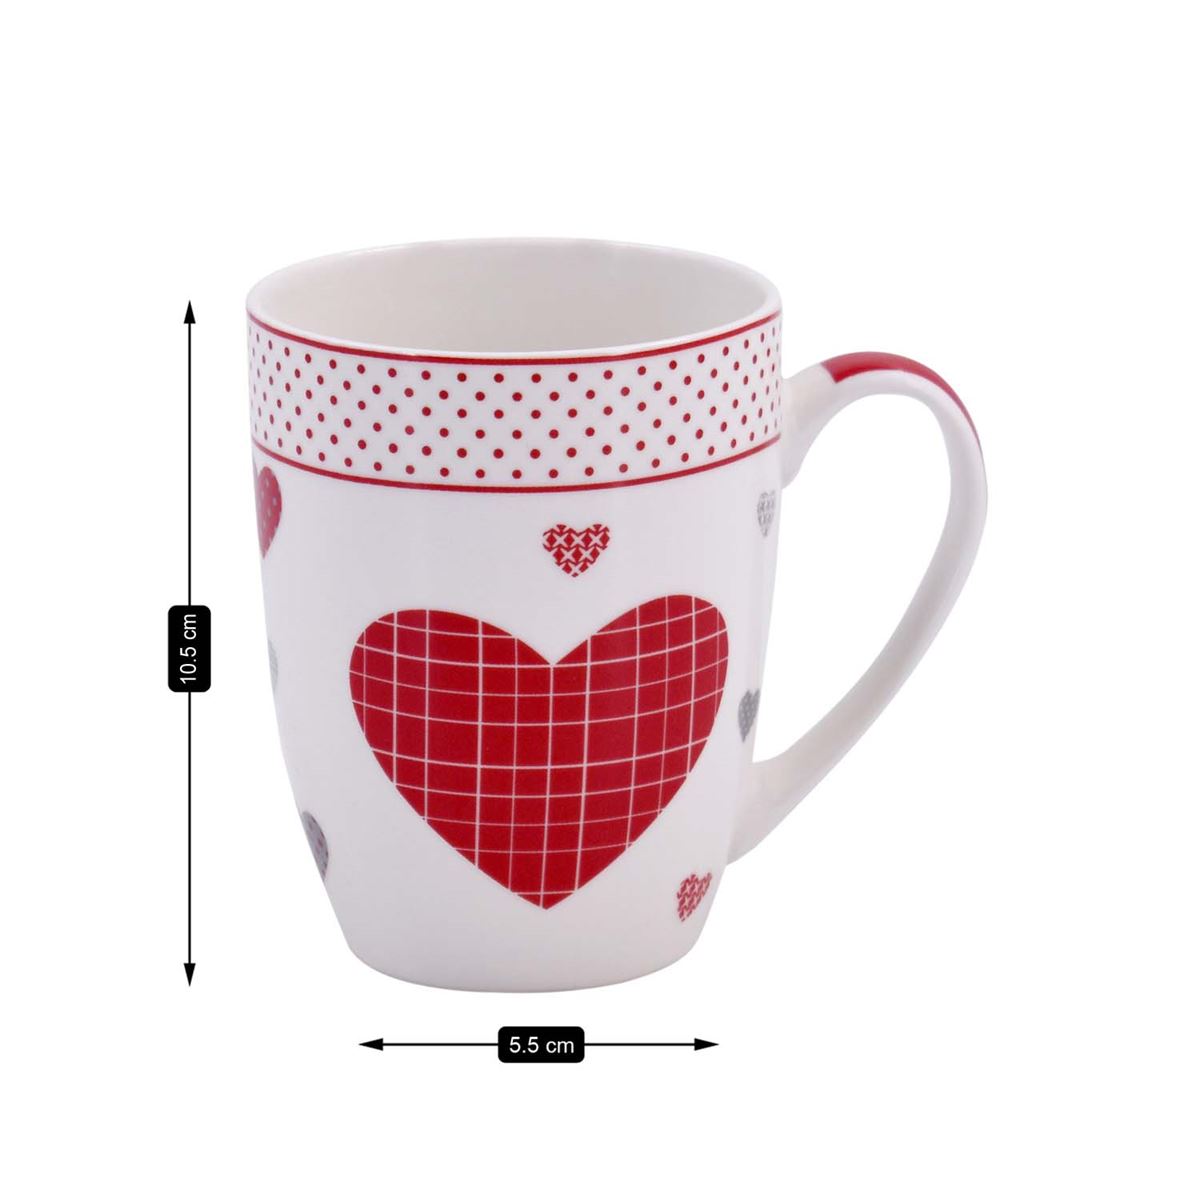 Printed Ceramic Coffee or Tea Mug with handle - 325ml (3788G-C)